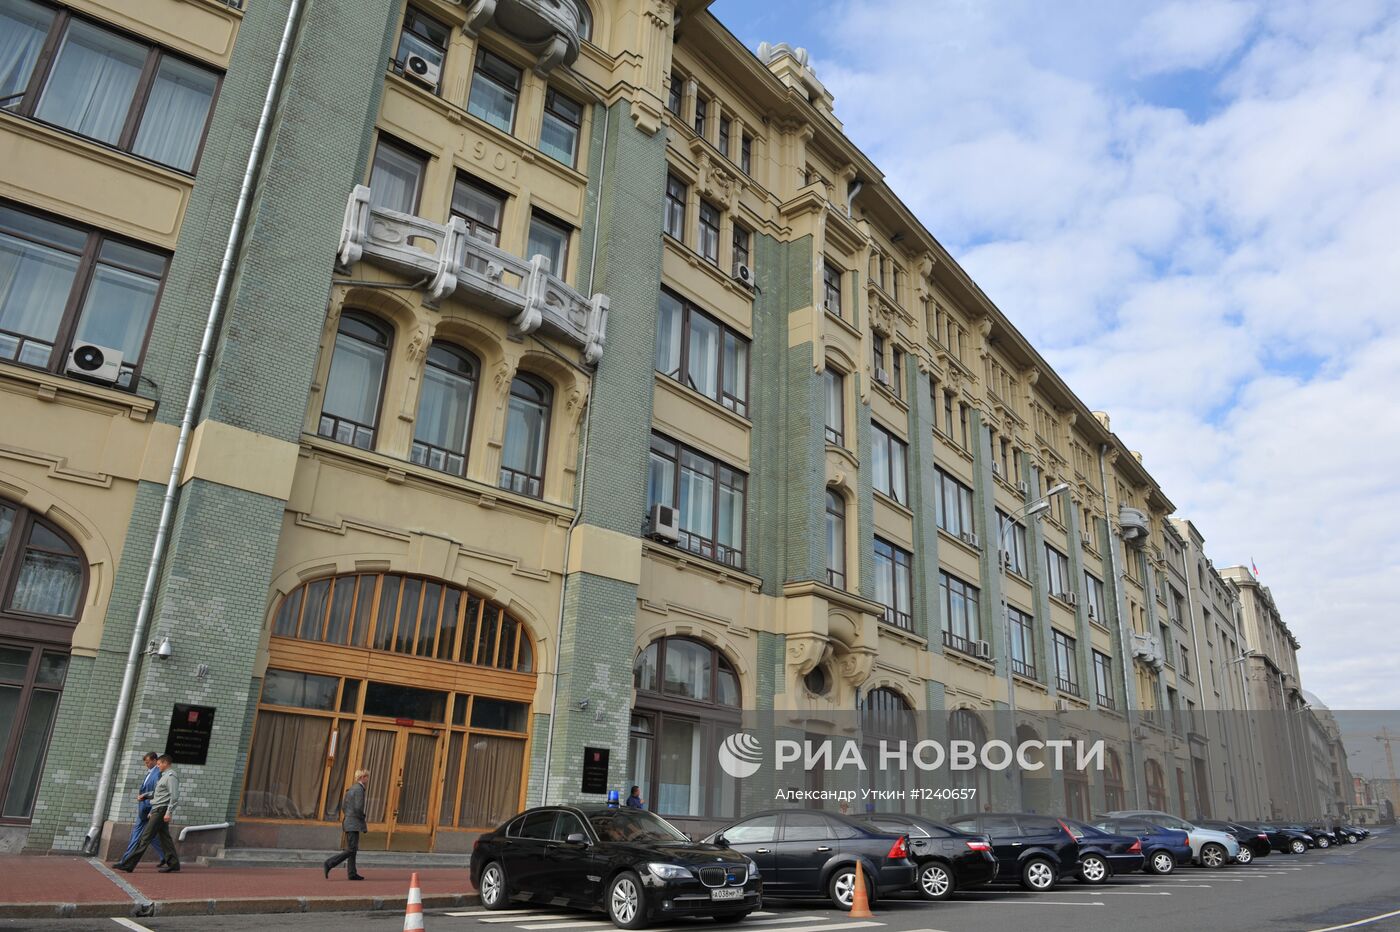 Здание администрации президента России на Старой площади